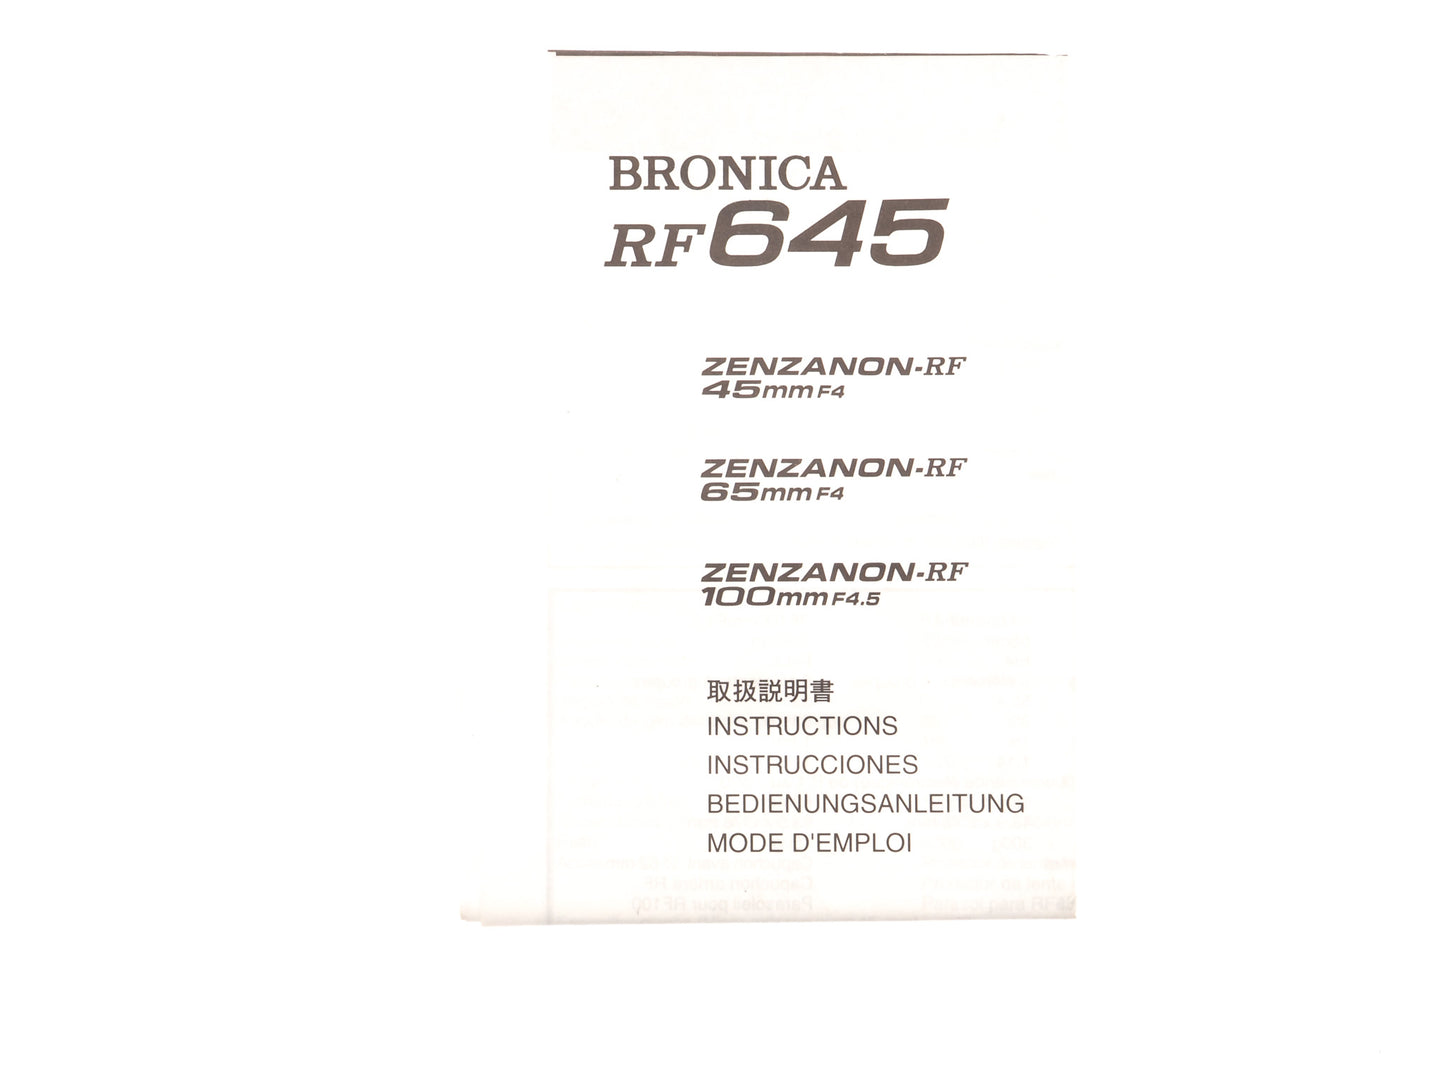 Zenza Bronica RF 645 Instructions - Accessory